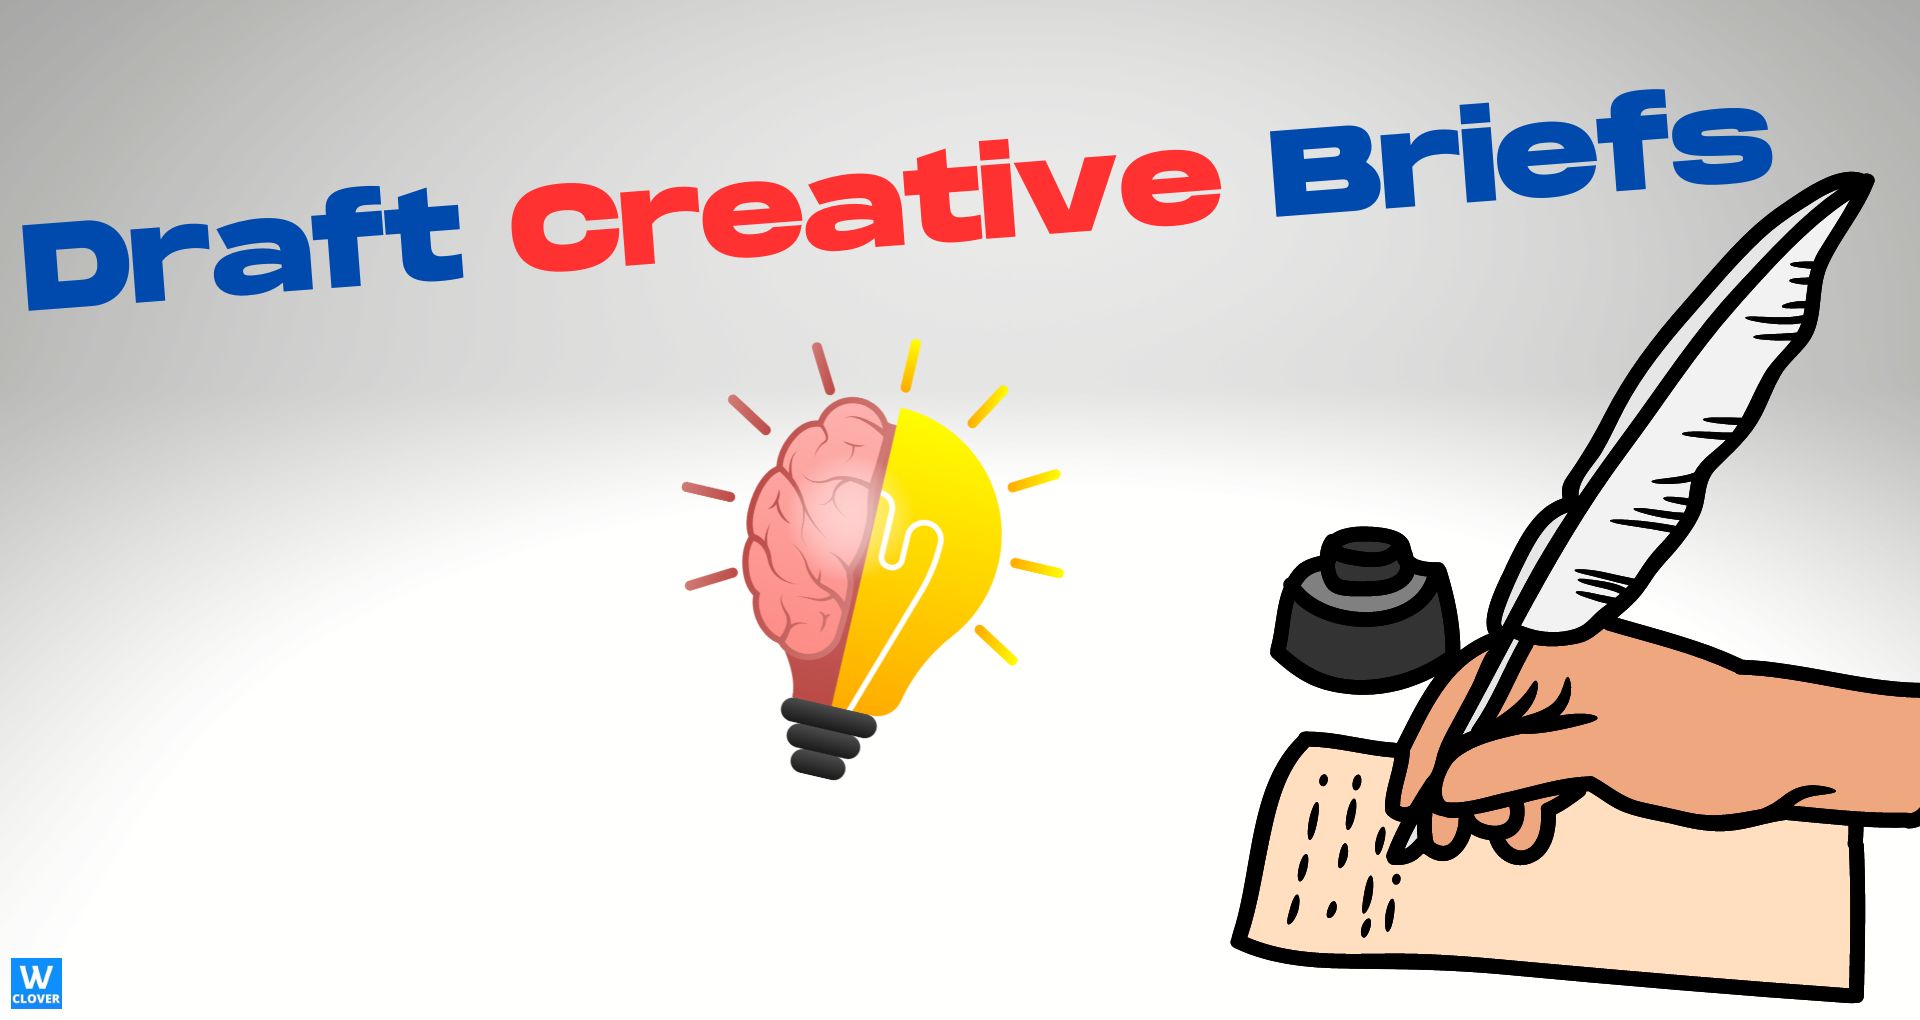 copywriting exercises- Draft up creative briefs 